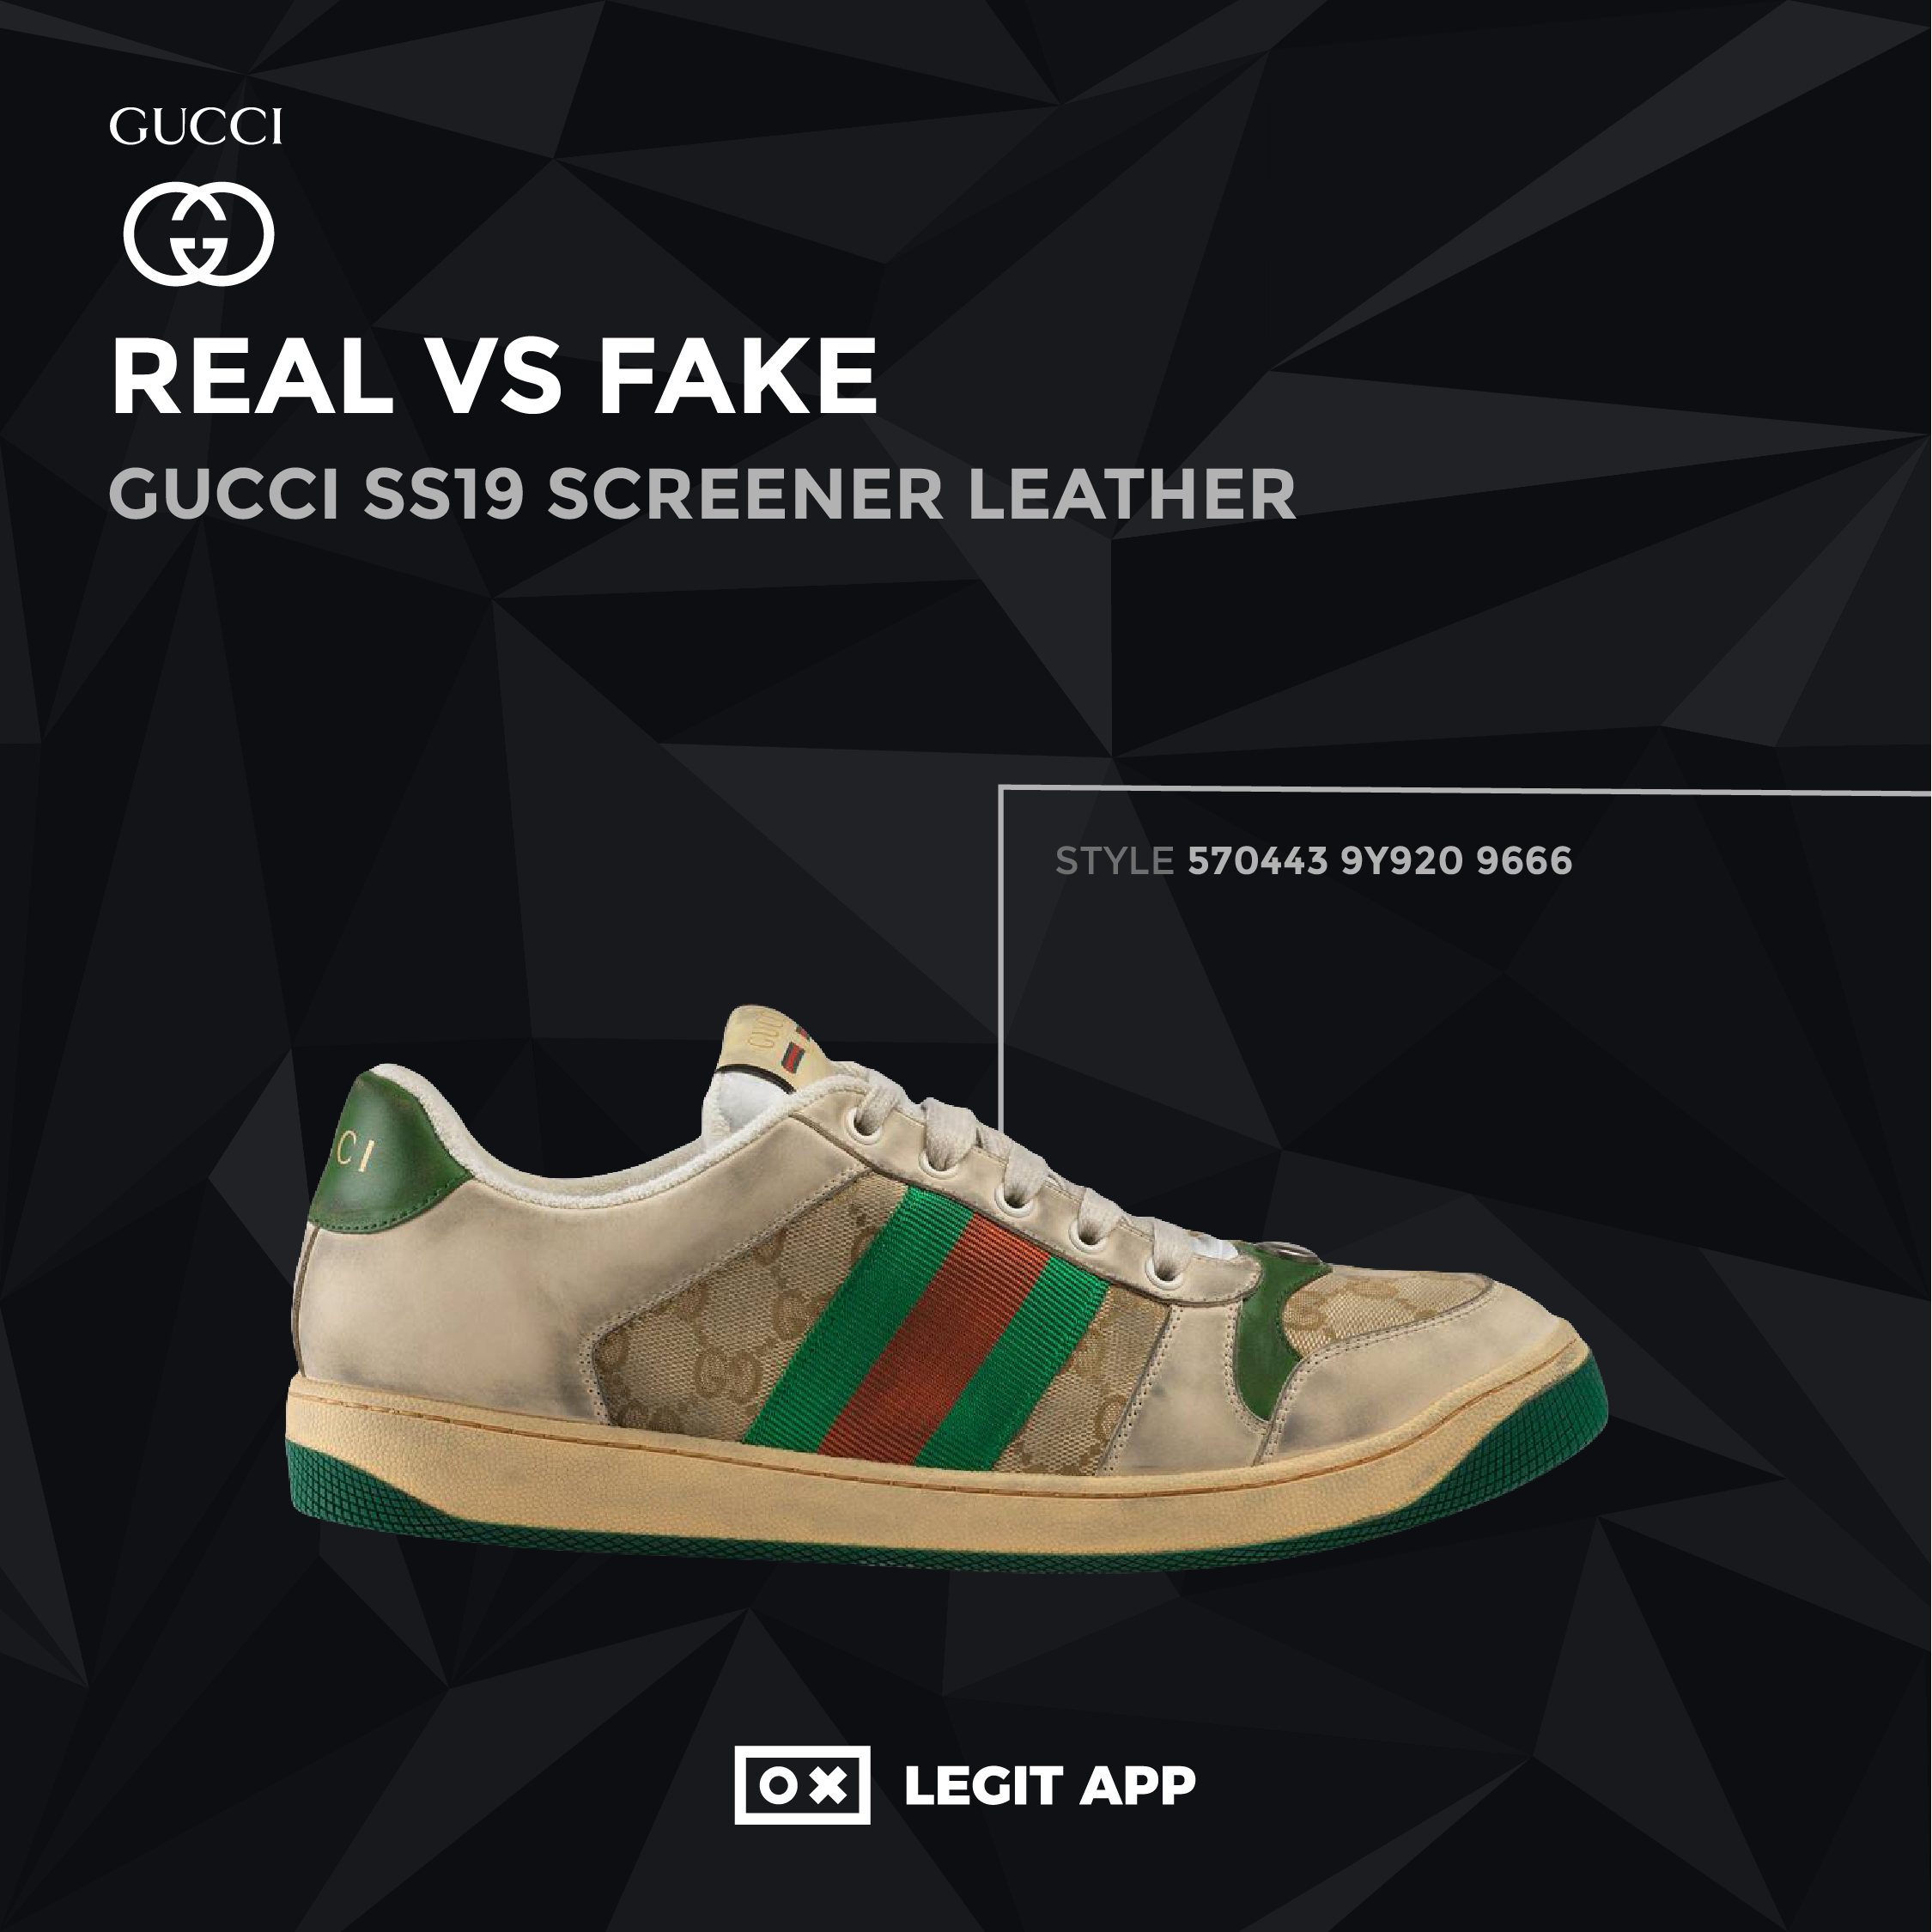 fake vs real gucci sneakers